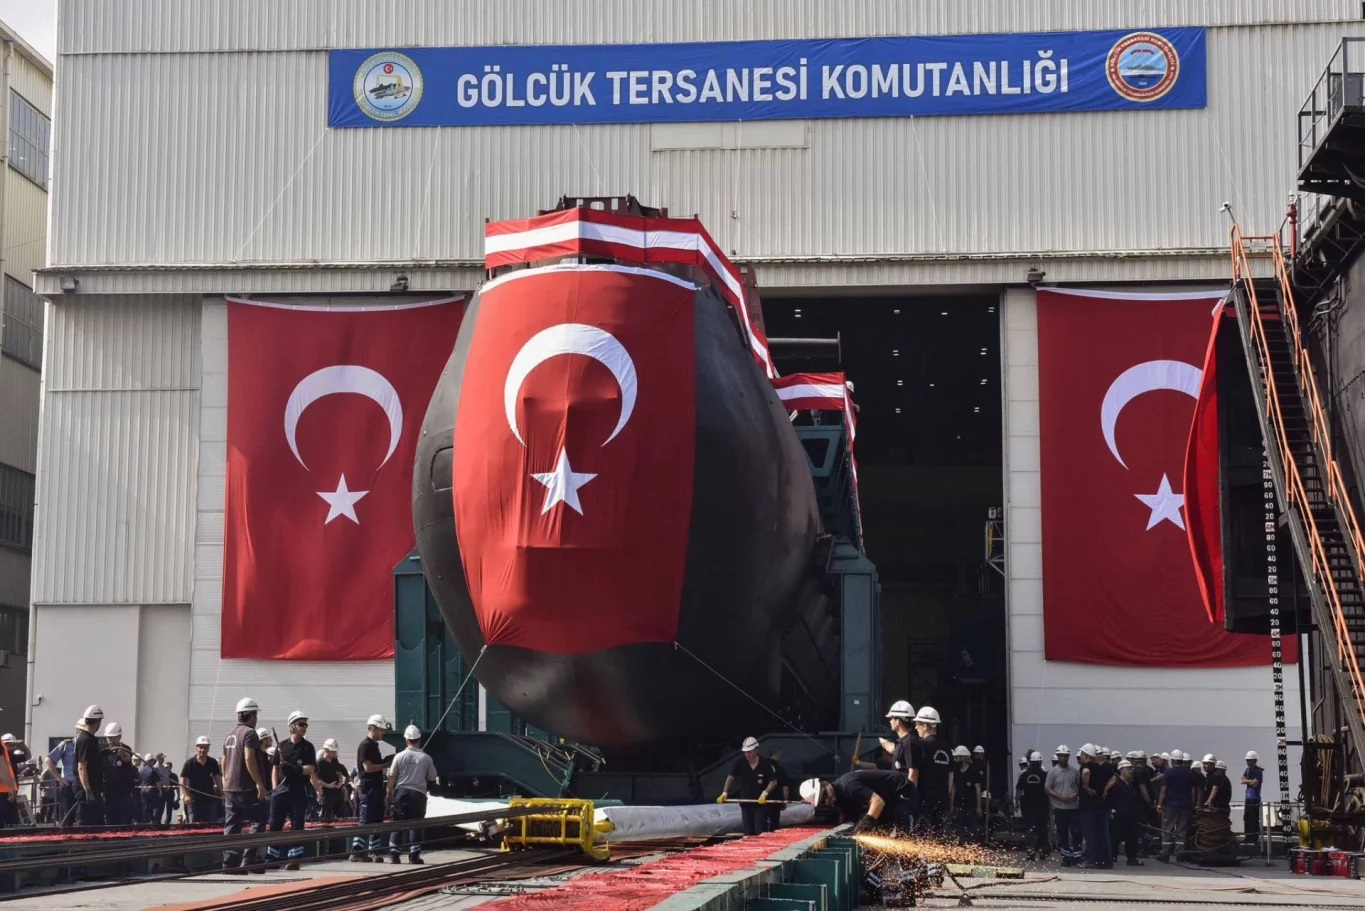 Turkey Launches Third Reis-Class Submarine at Gölcük Shipyard